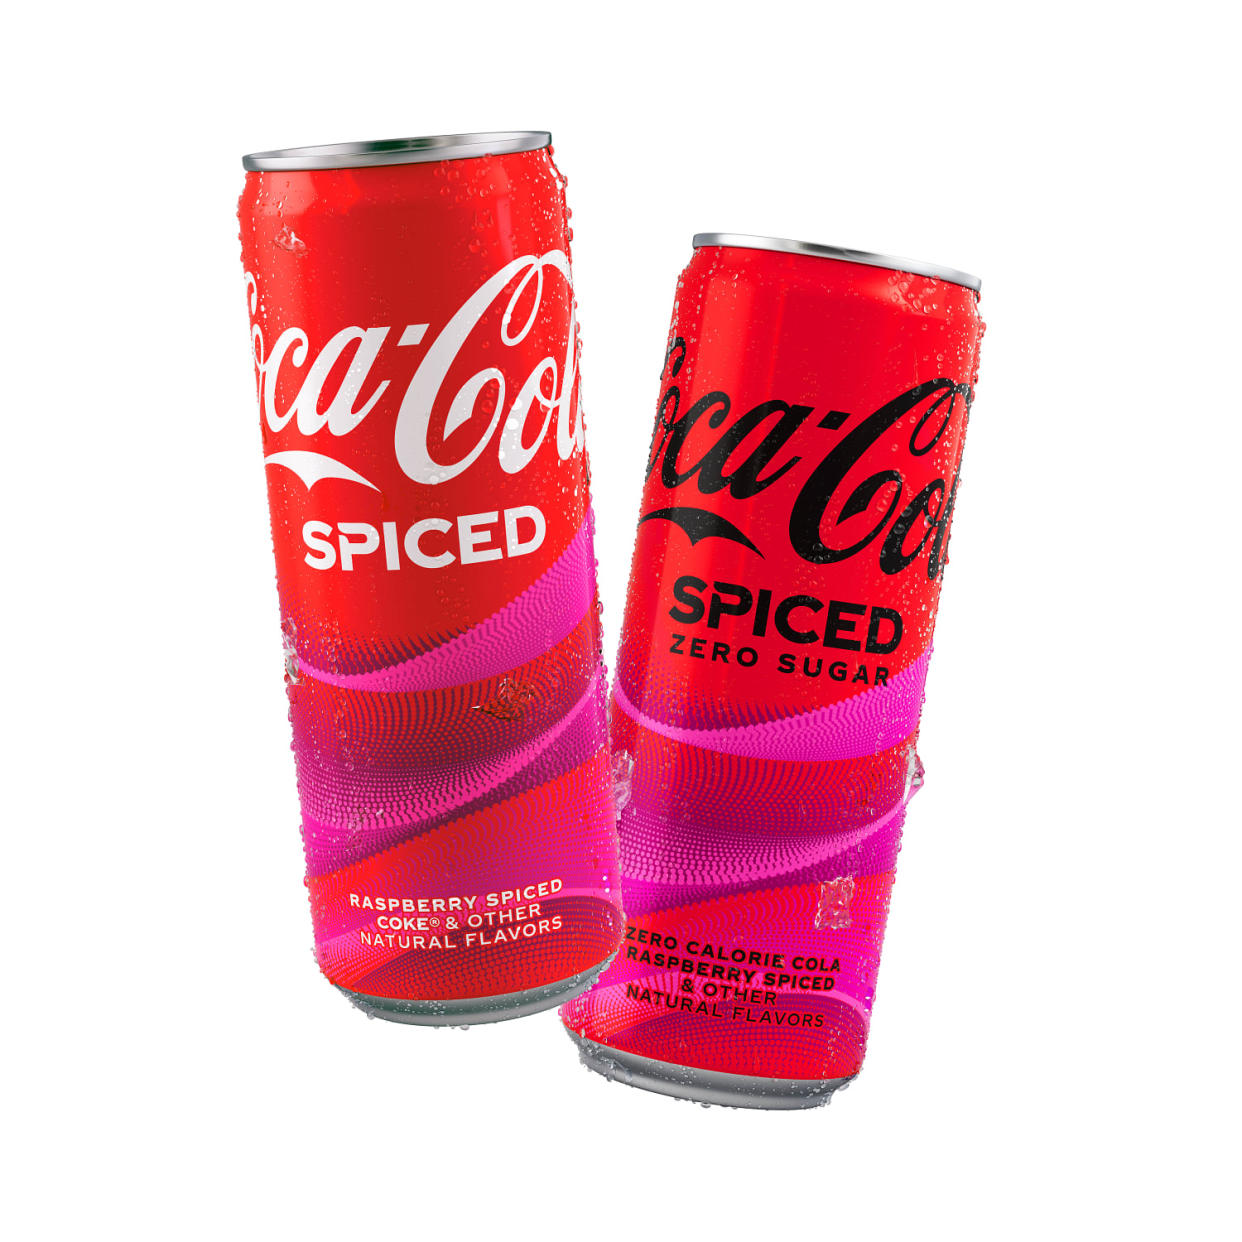 Coca-Cola Spiced in cans (Courtesy Coca-Cola)